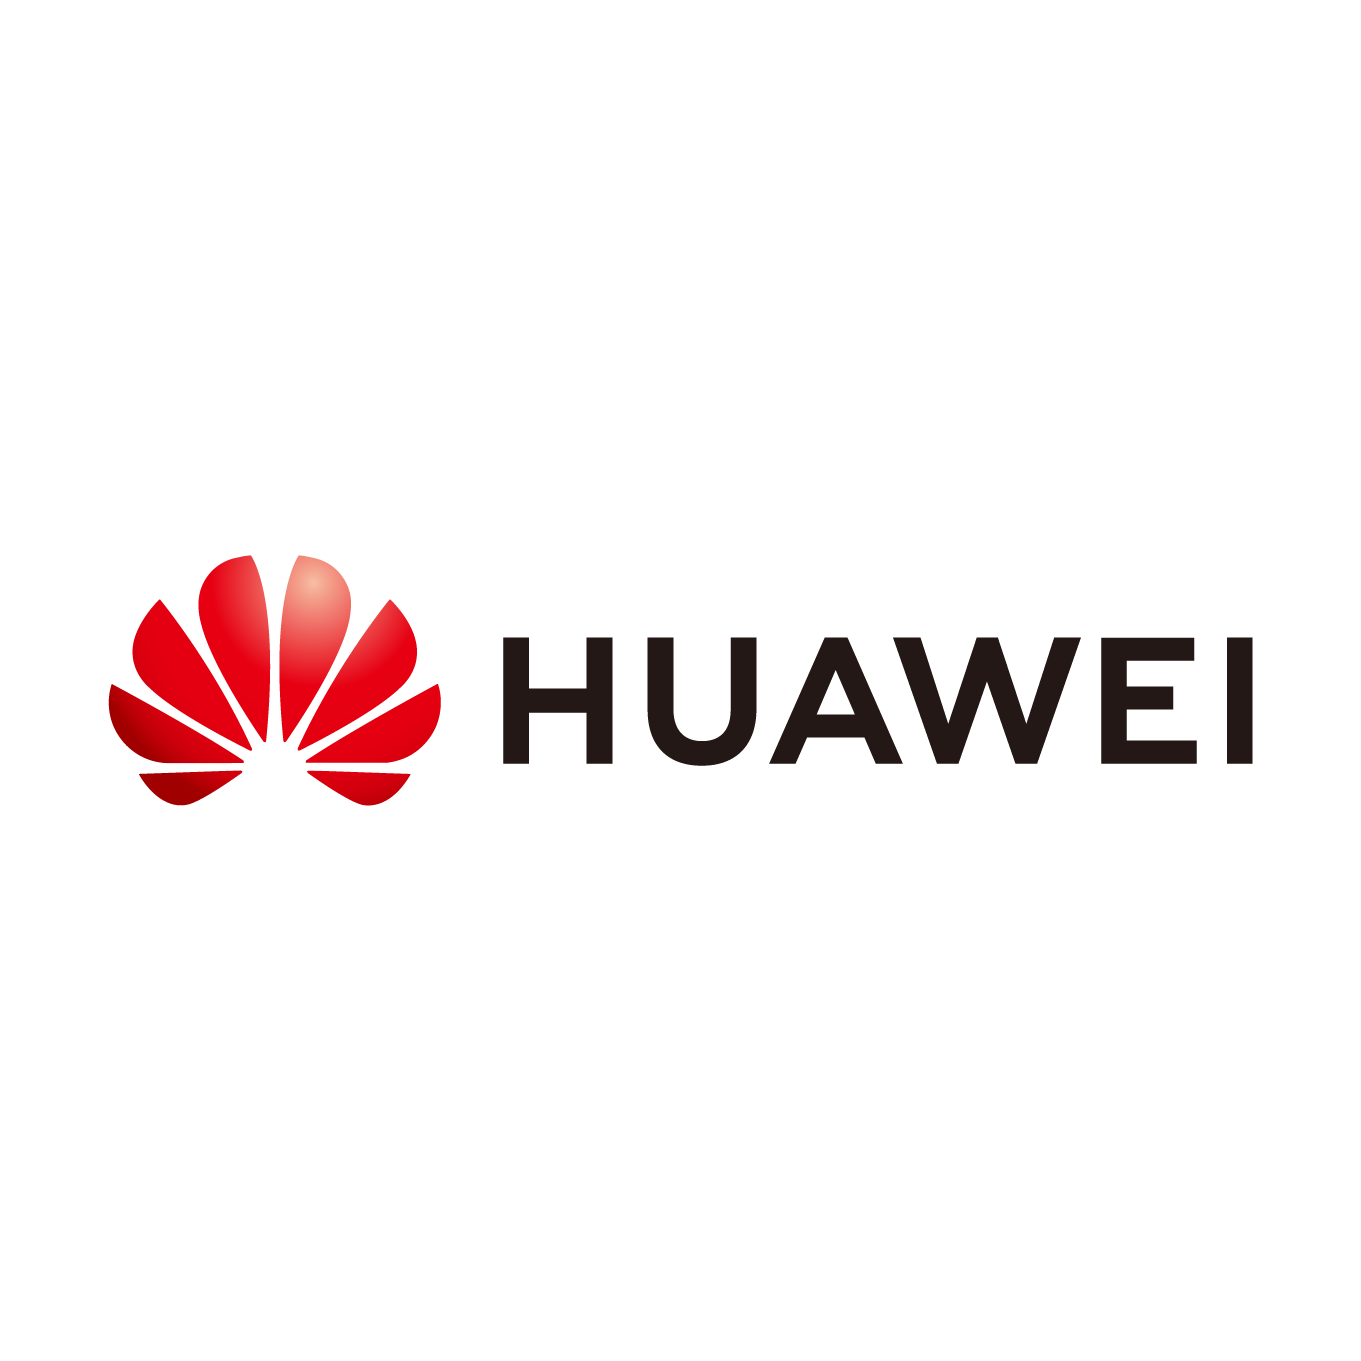 Solar Huawei